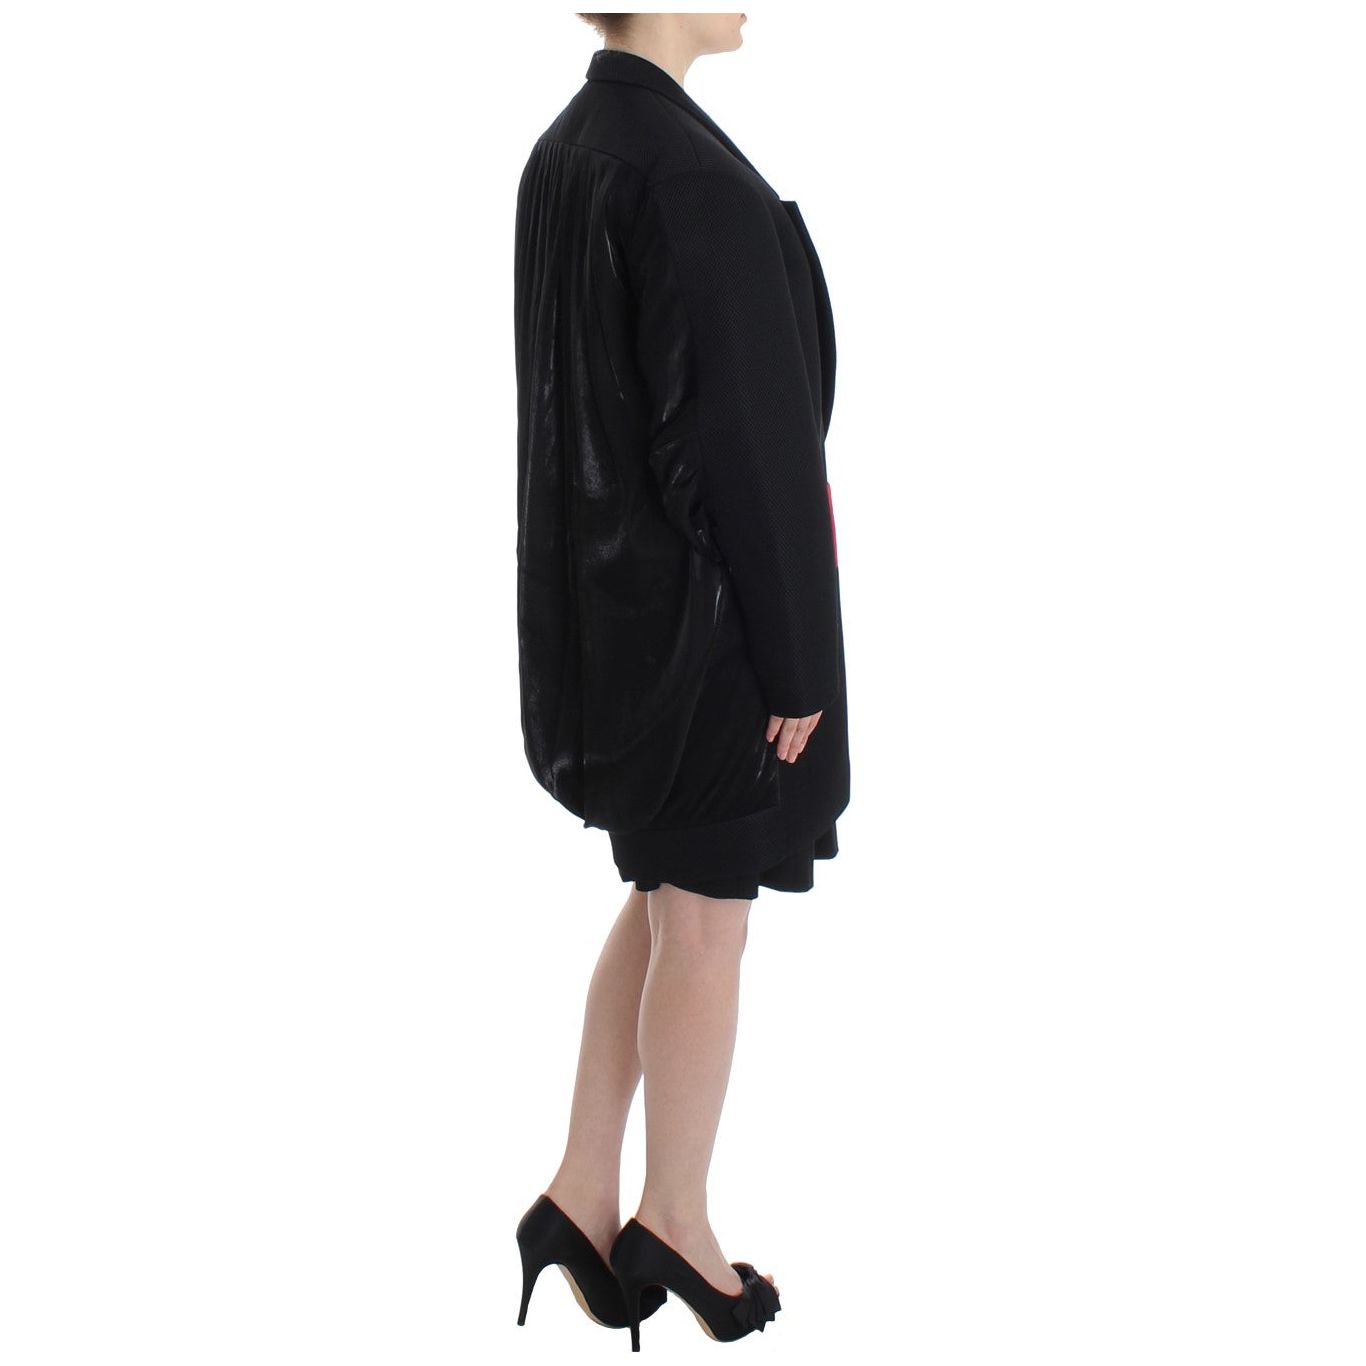 KAALE SUKTAEElegant Draped Long Coat in Black with Red AccentsMcRichard Designer Brands£379.00